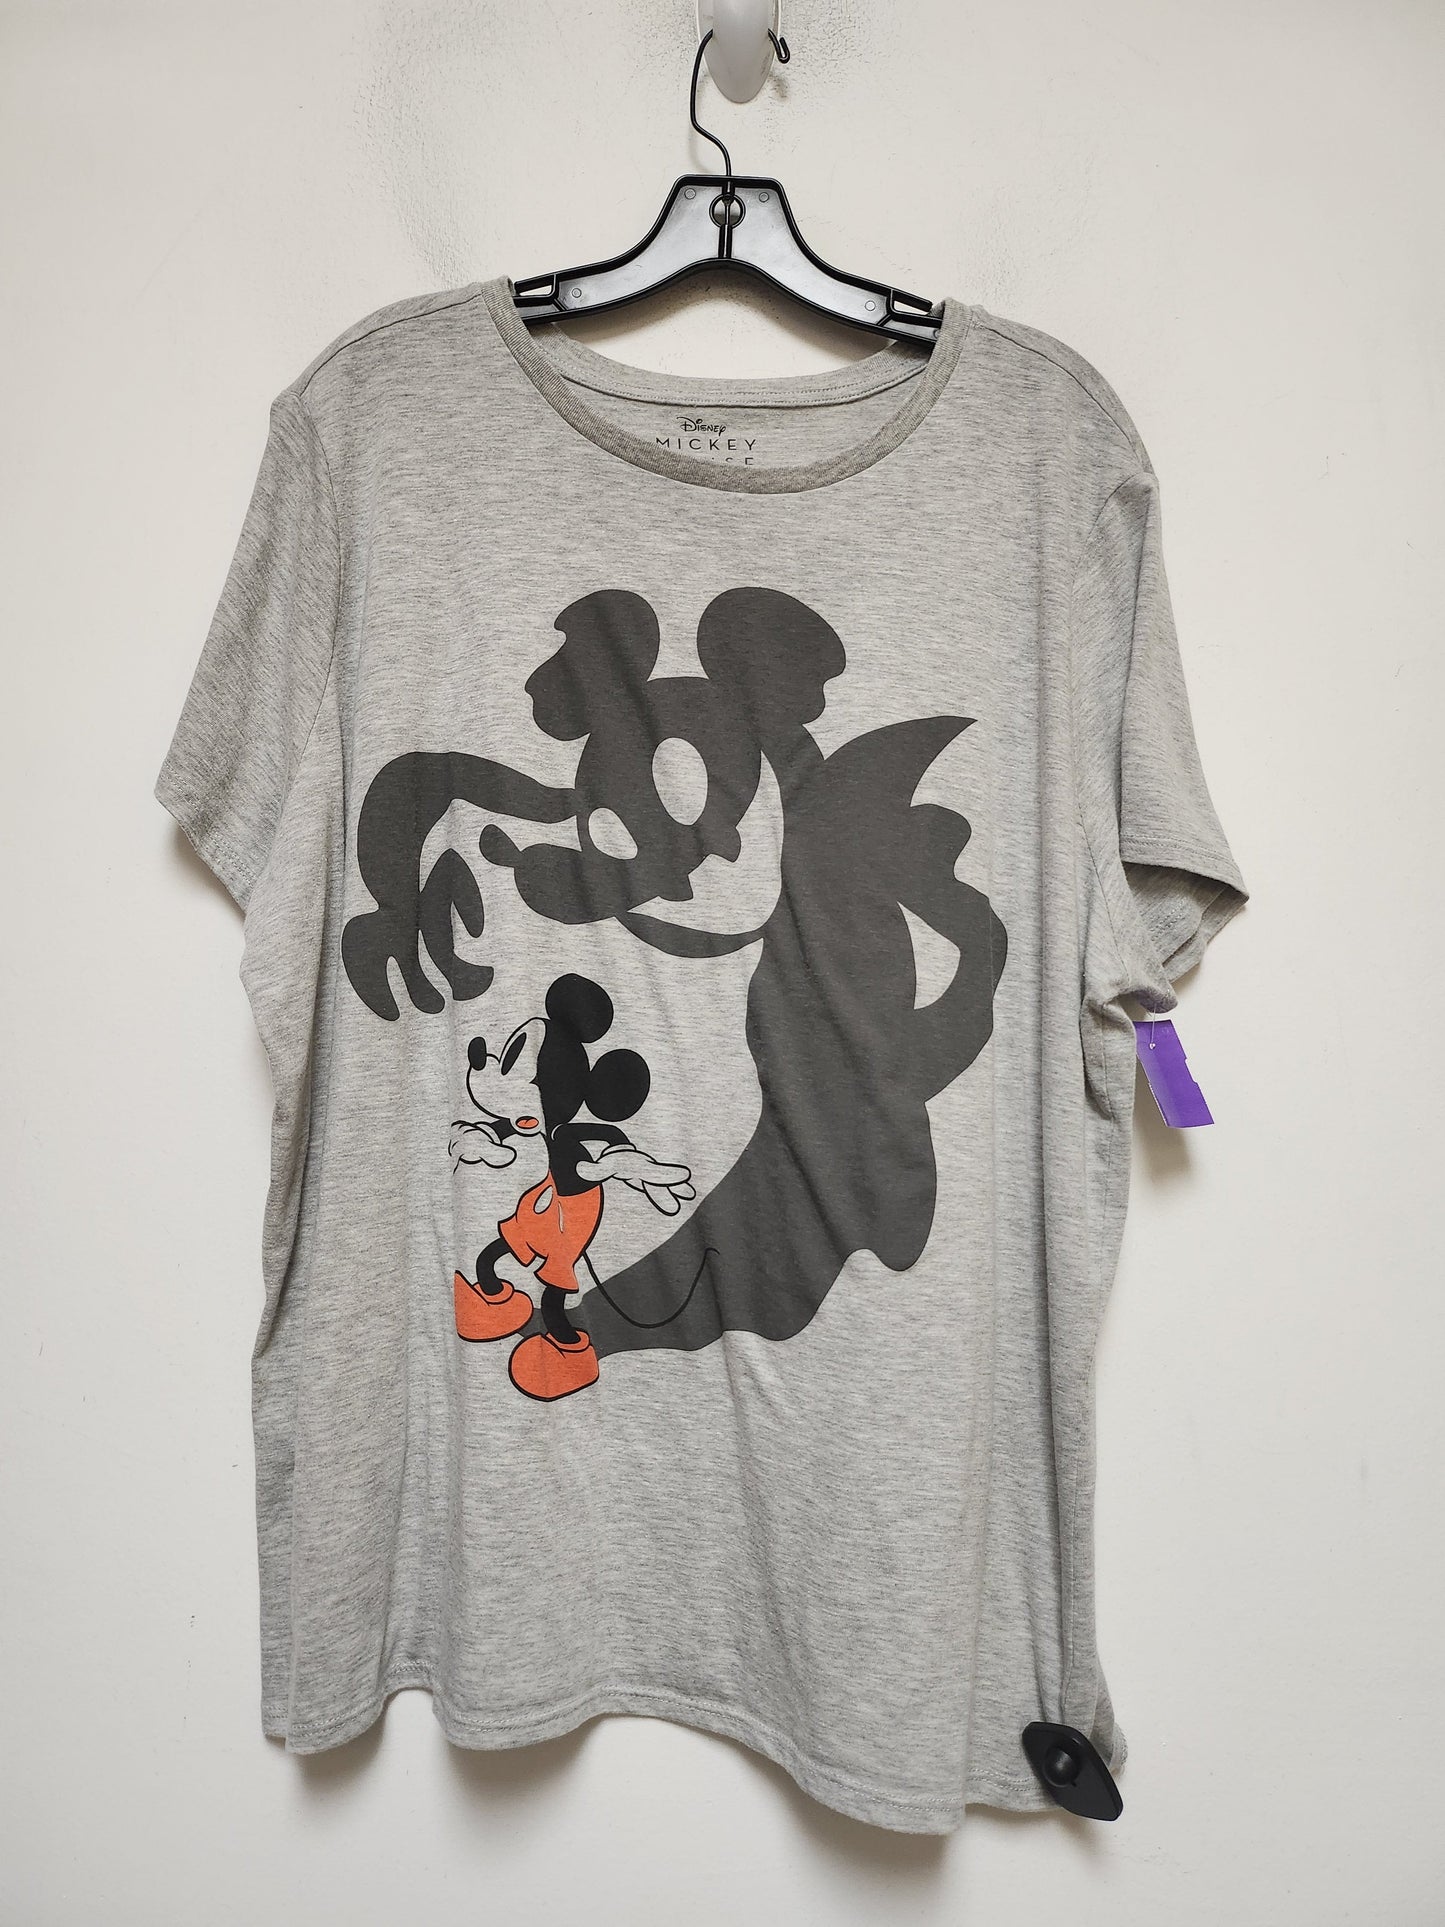 Grey Top Short Sleeve Basic Walt Disney, Size 3x